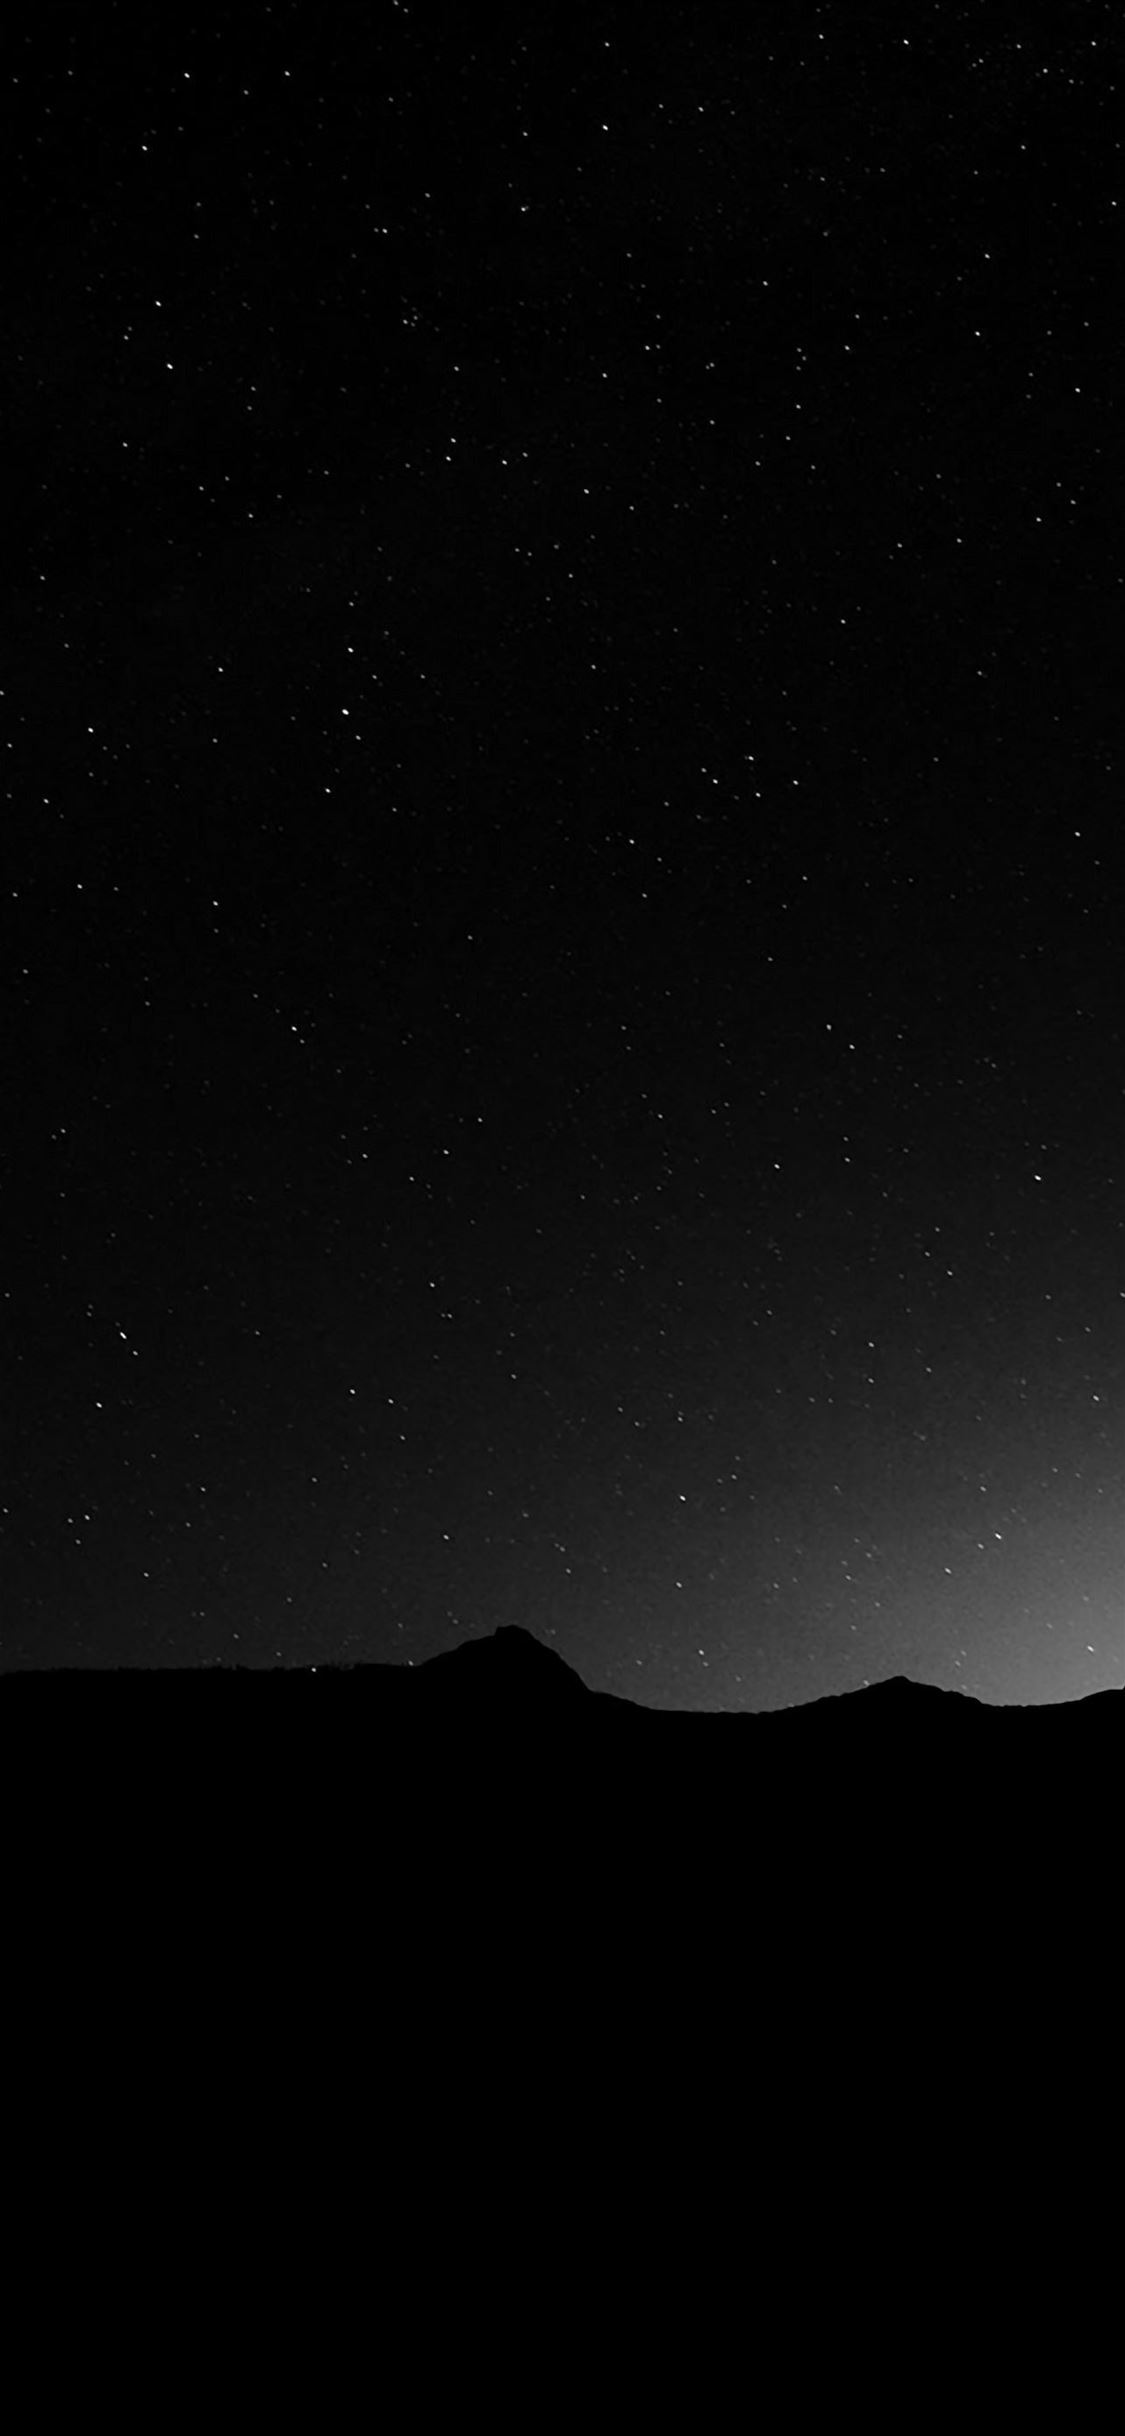 Dark Night Sky Silent Wide Mountain Star Shining iPhone wallpaper 